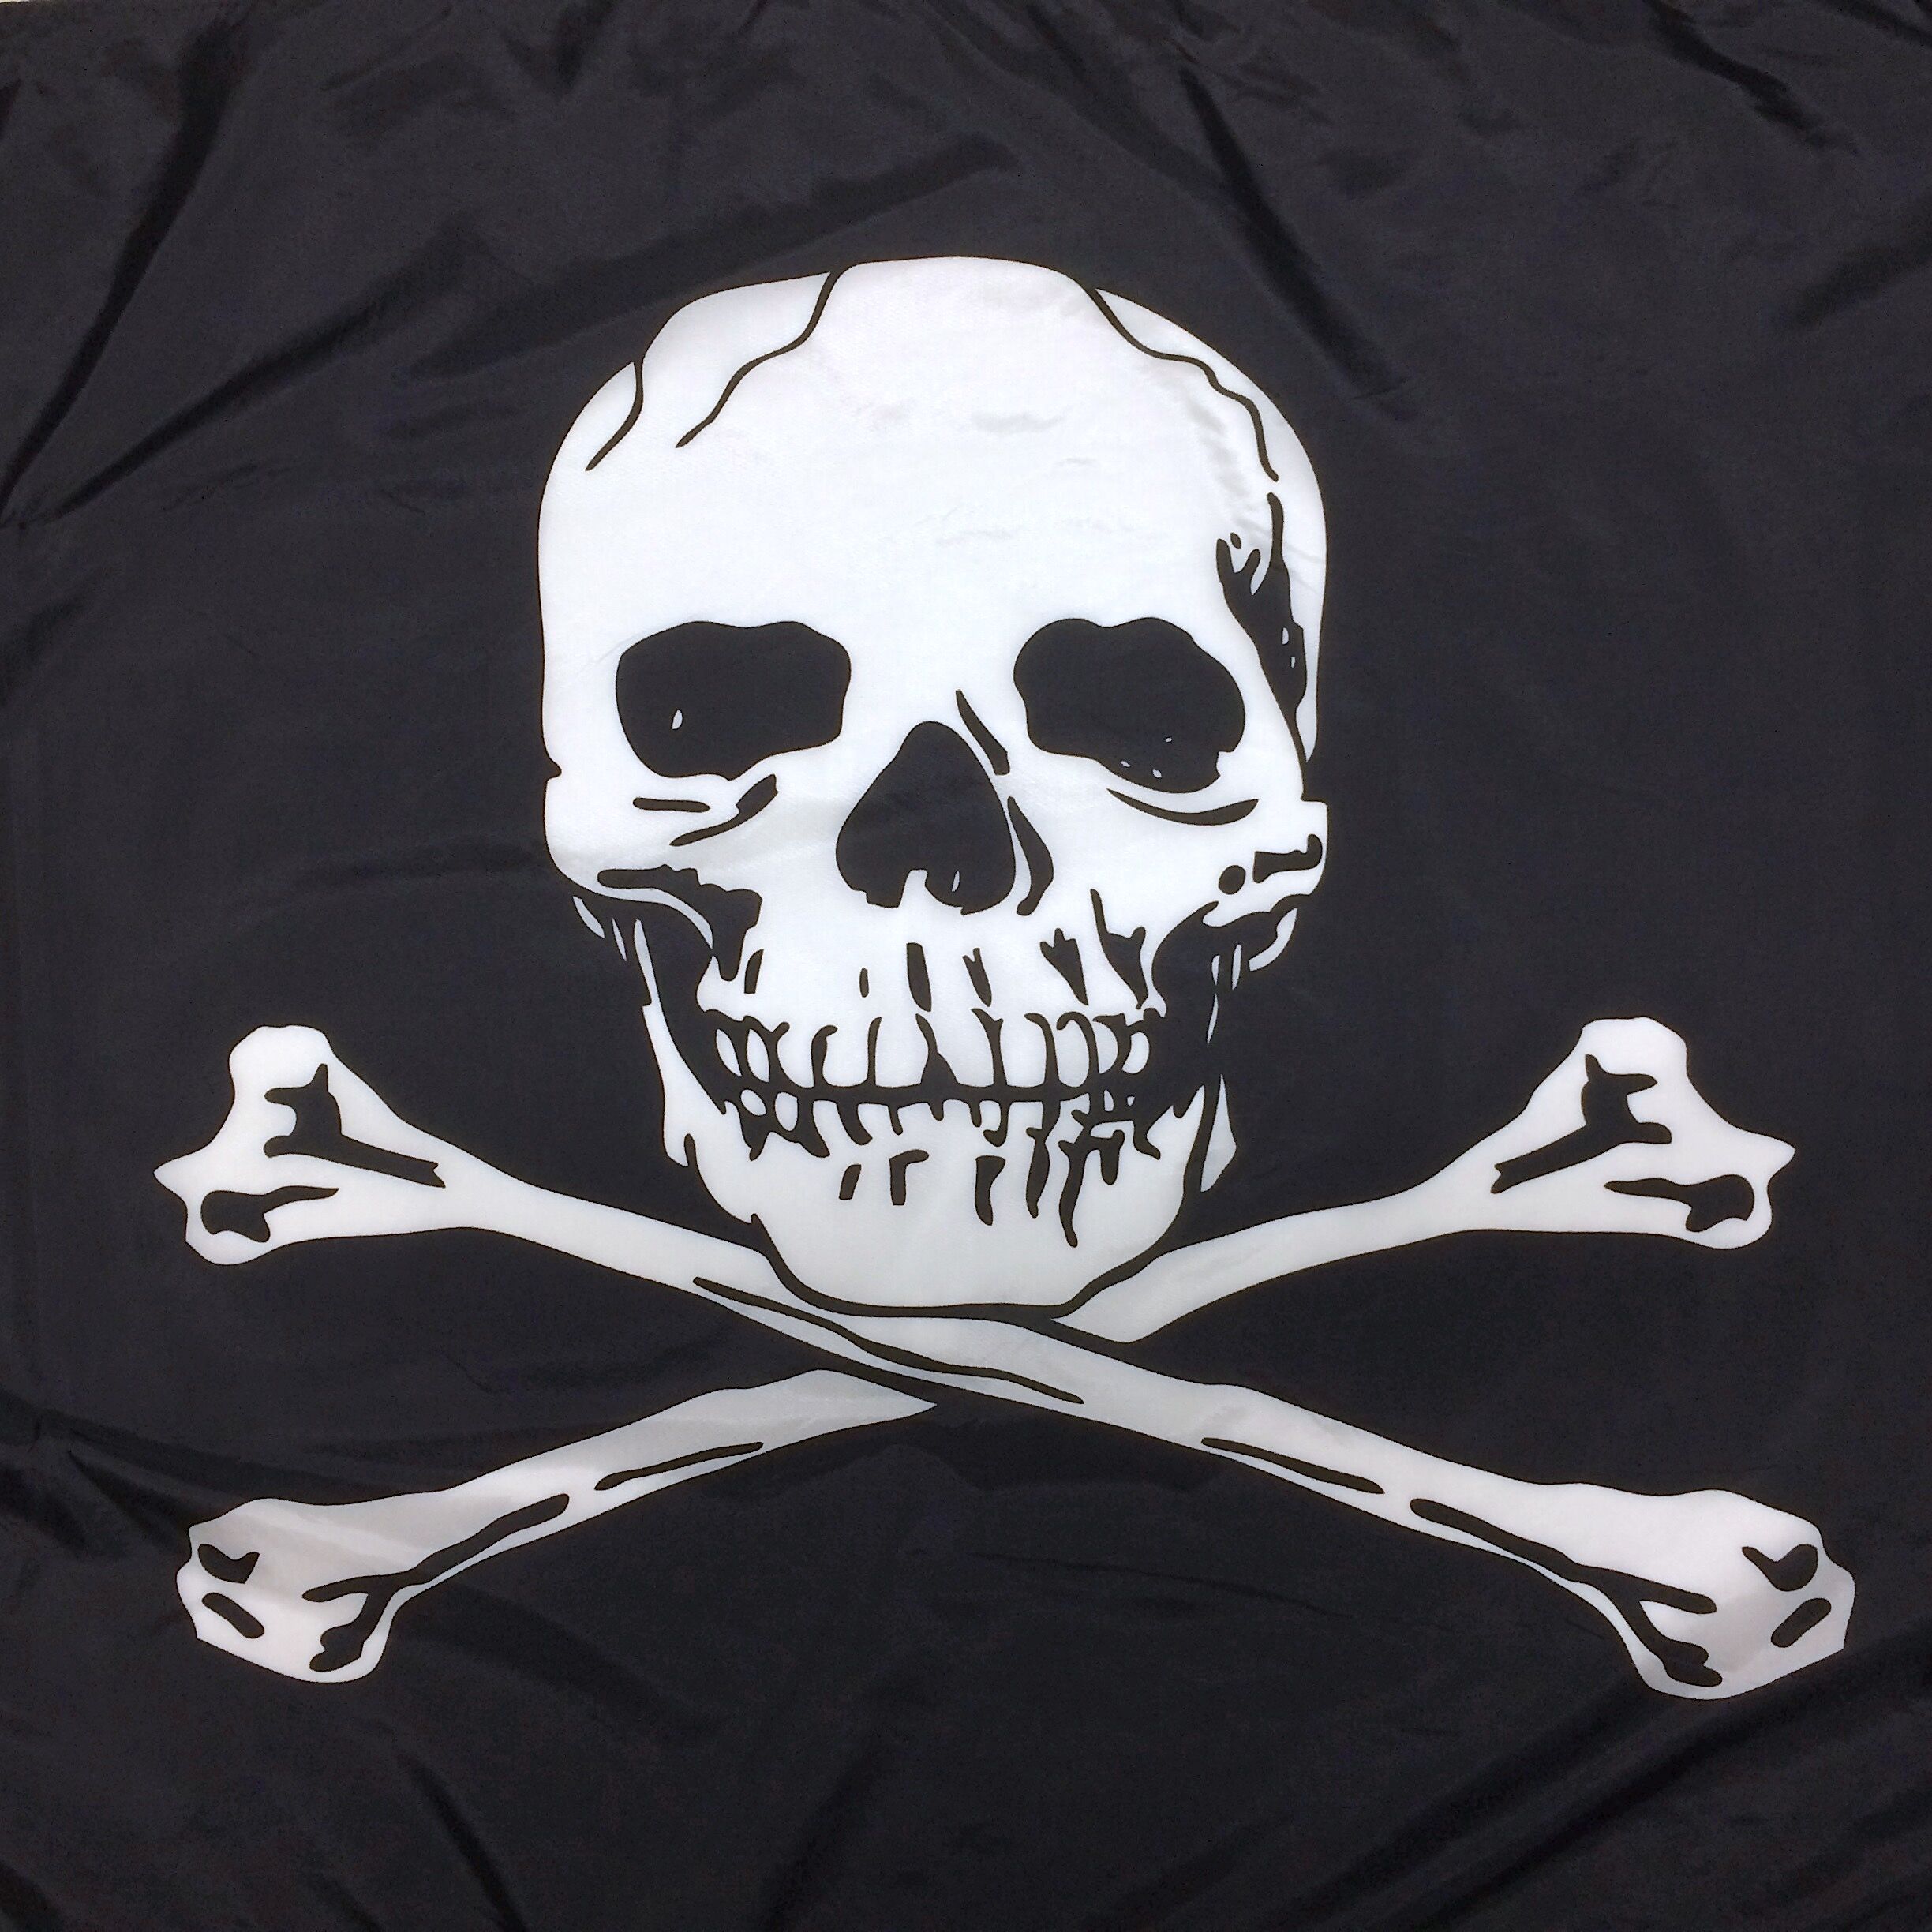 Pirate flag for sale  Jolly Roger flag 